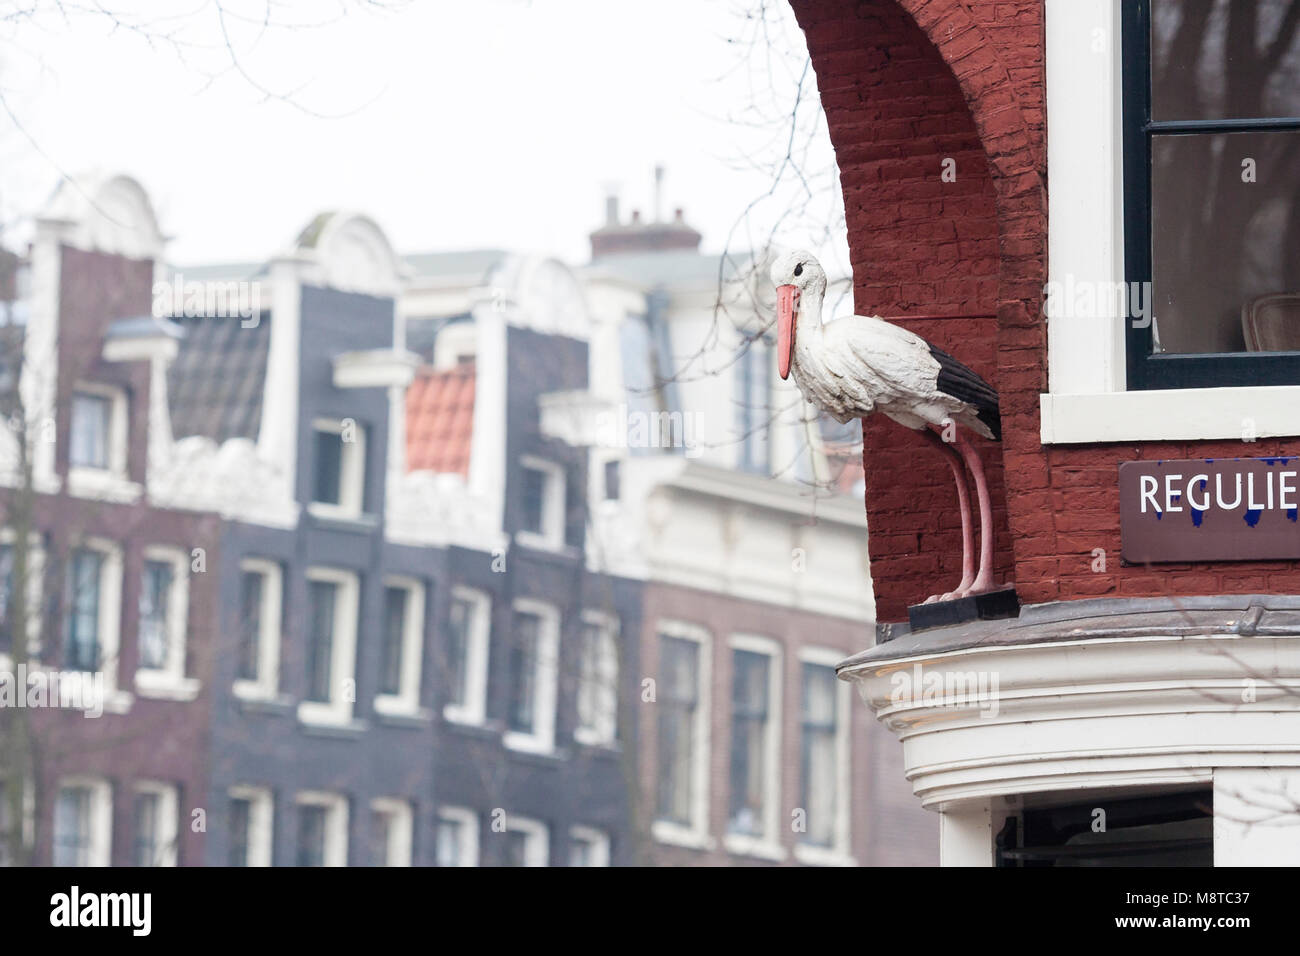 Ortstyp van ooievaar op kruising Prinsengracht en Reguliersgracht; Statue von Stork an der Kreuzung der Prinsengracht und Reguliersgracht Stockfoto